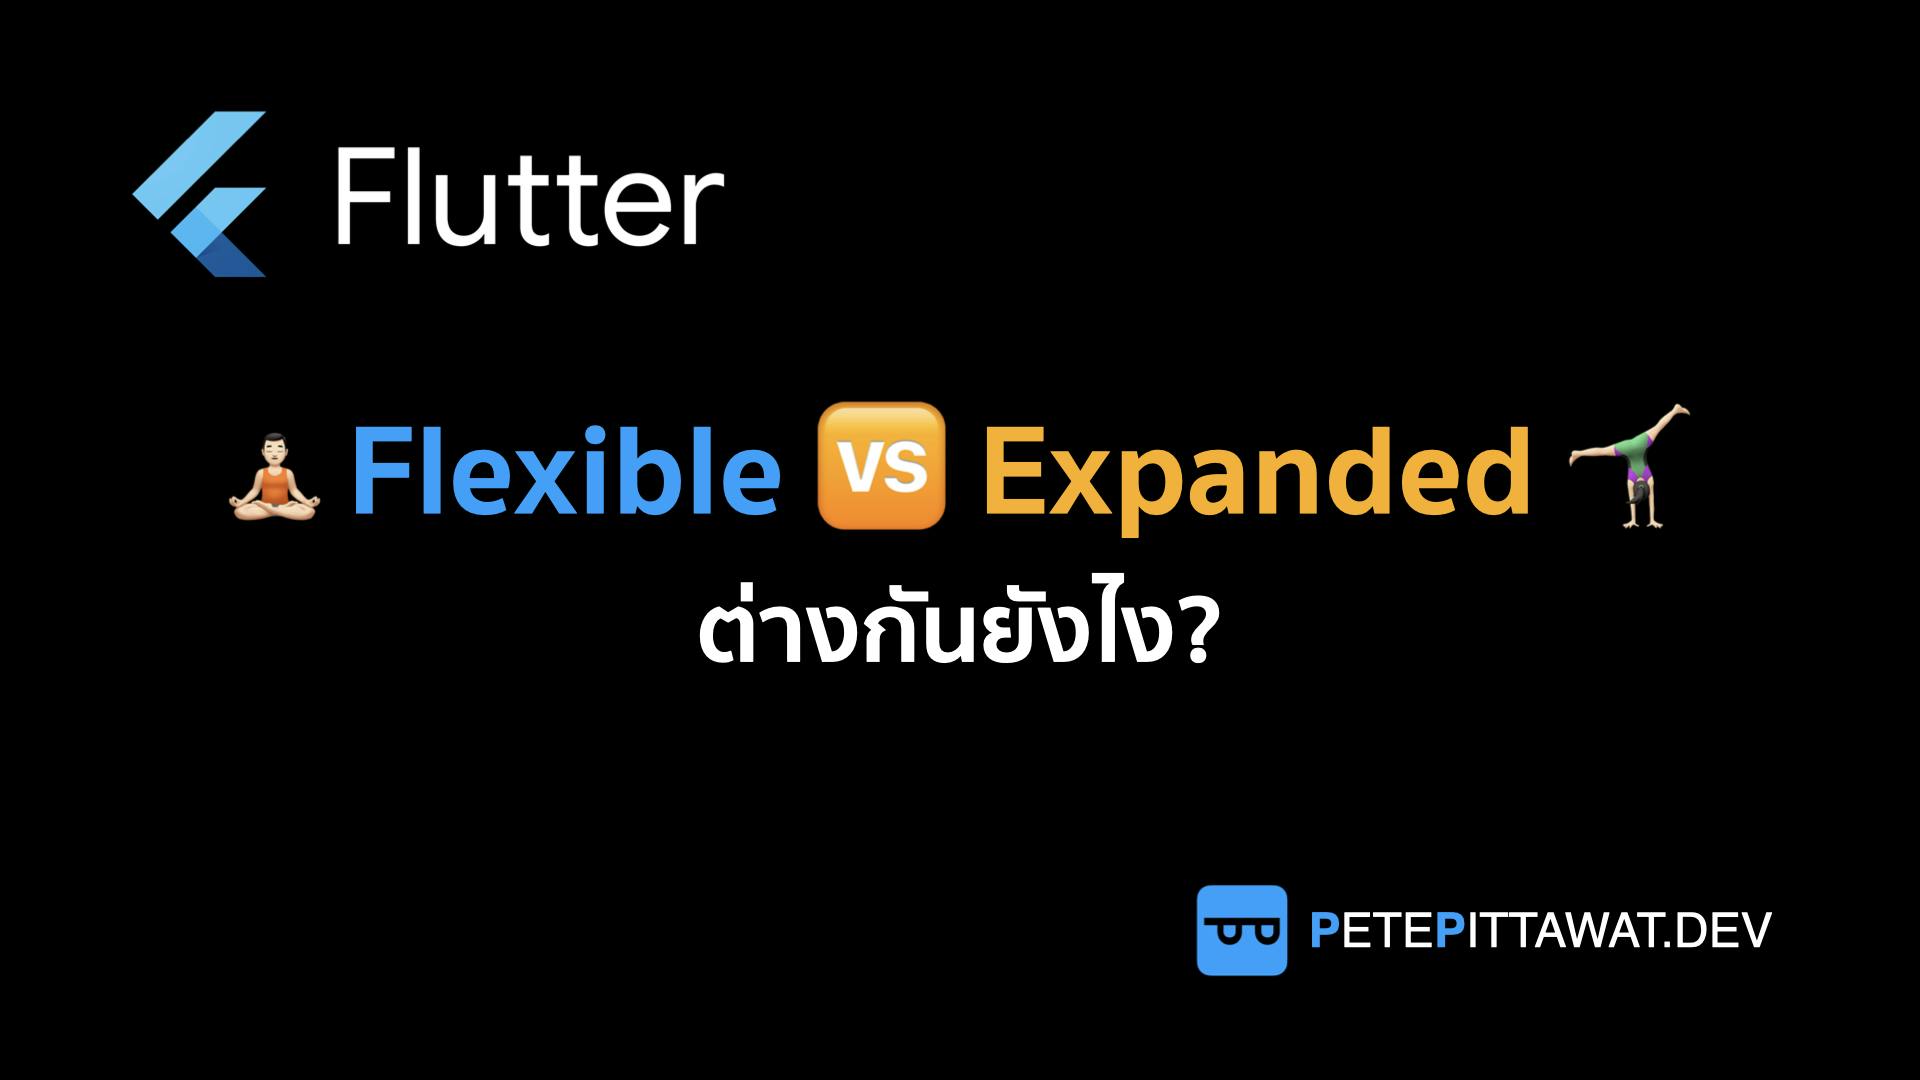 Cover Image for Flutter: Flexible vs Expanded